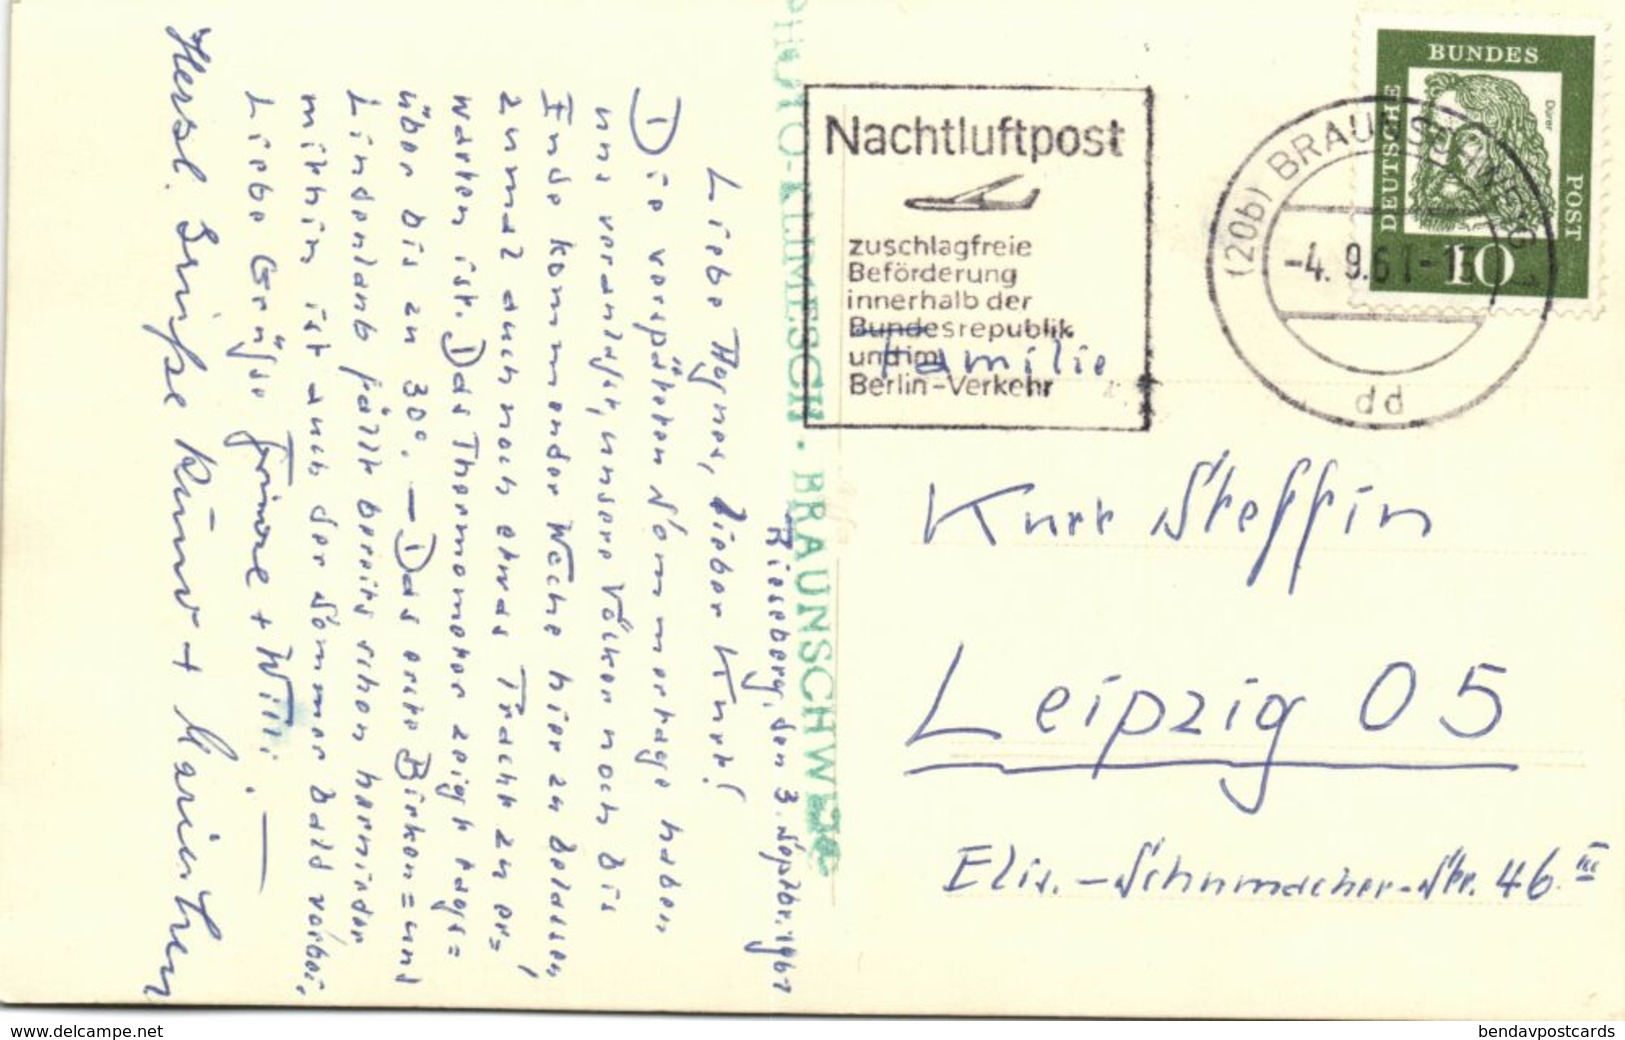 RIESEBERG, Kr. Helmstedt, Käthe-Kollwitz-Haus (1961) AK - Helmstedt